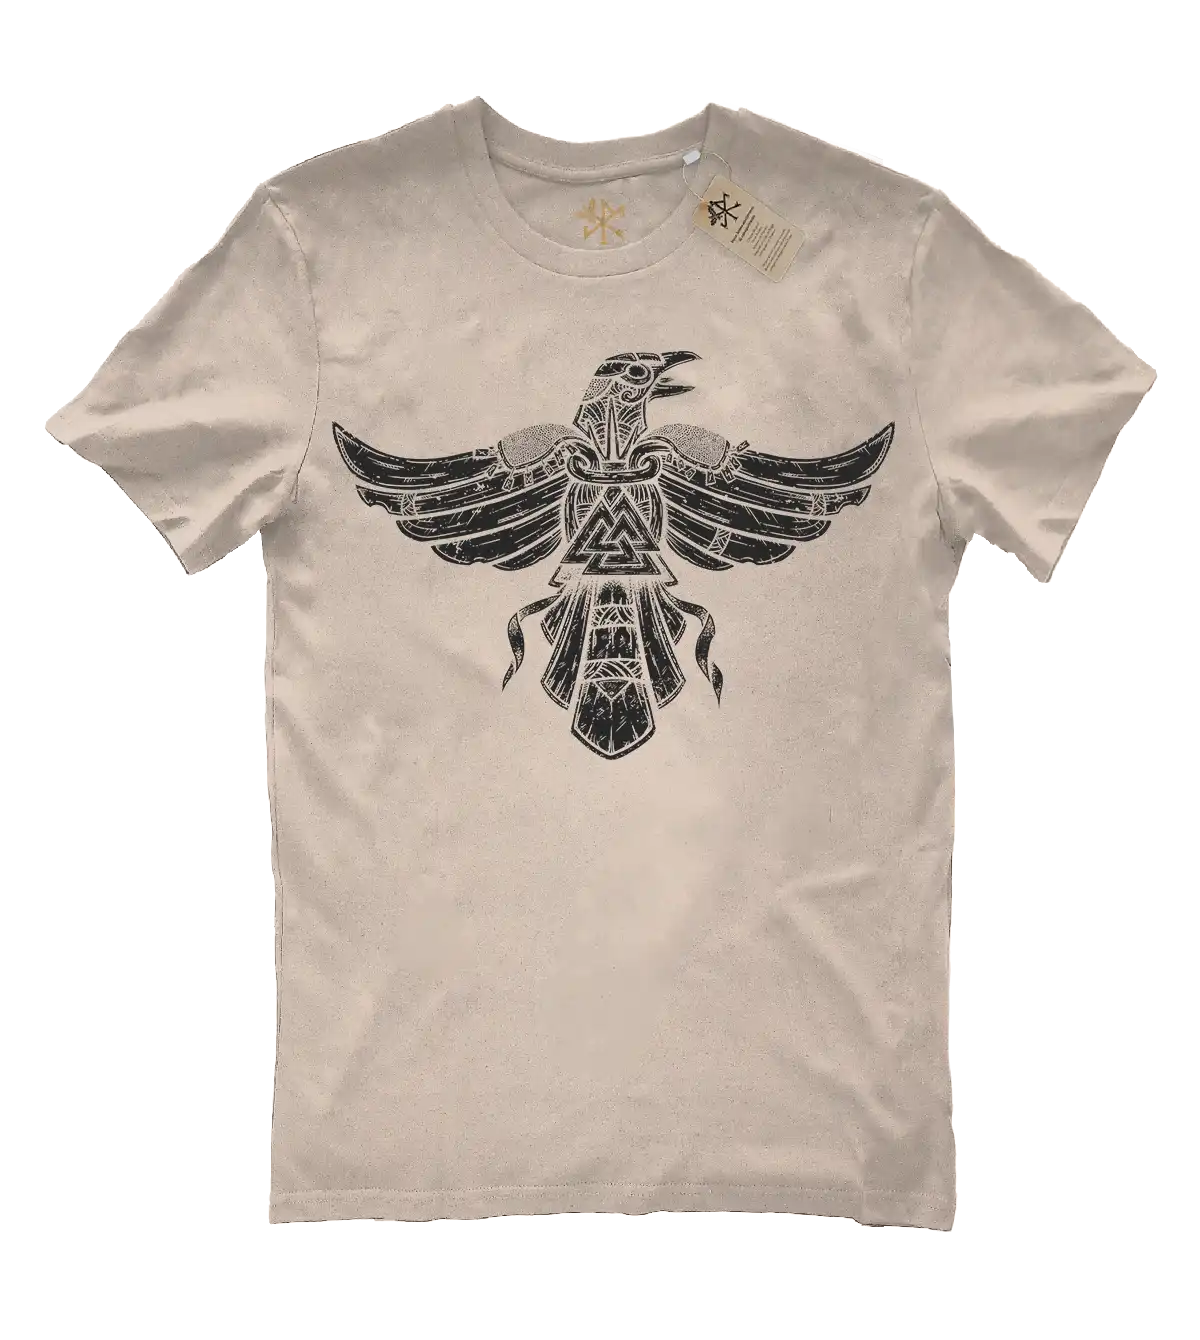 Huginn - t-shirt corbeau viking